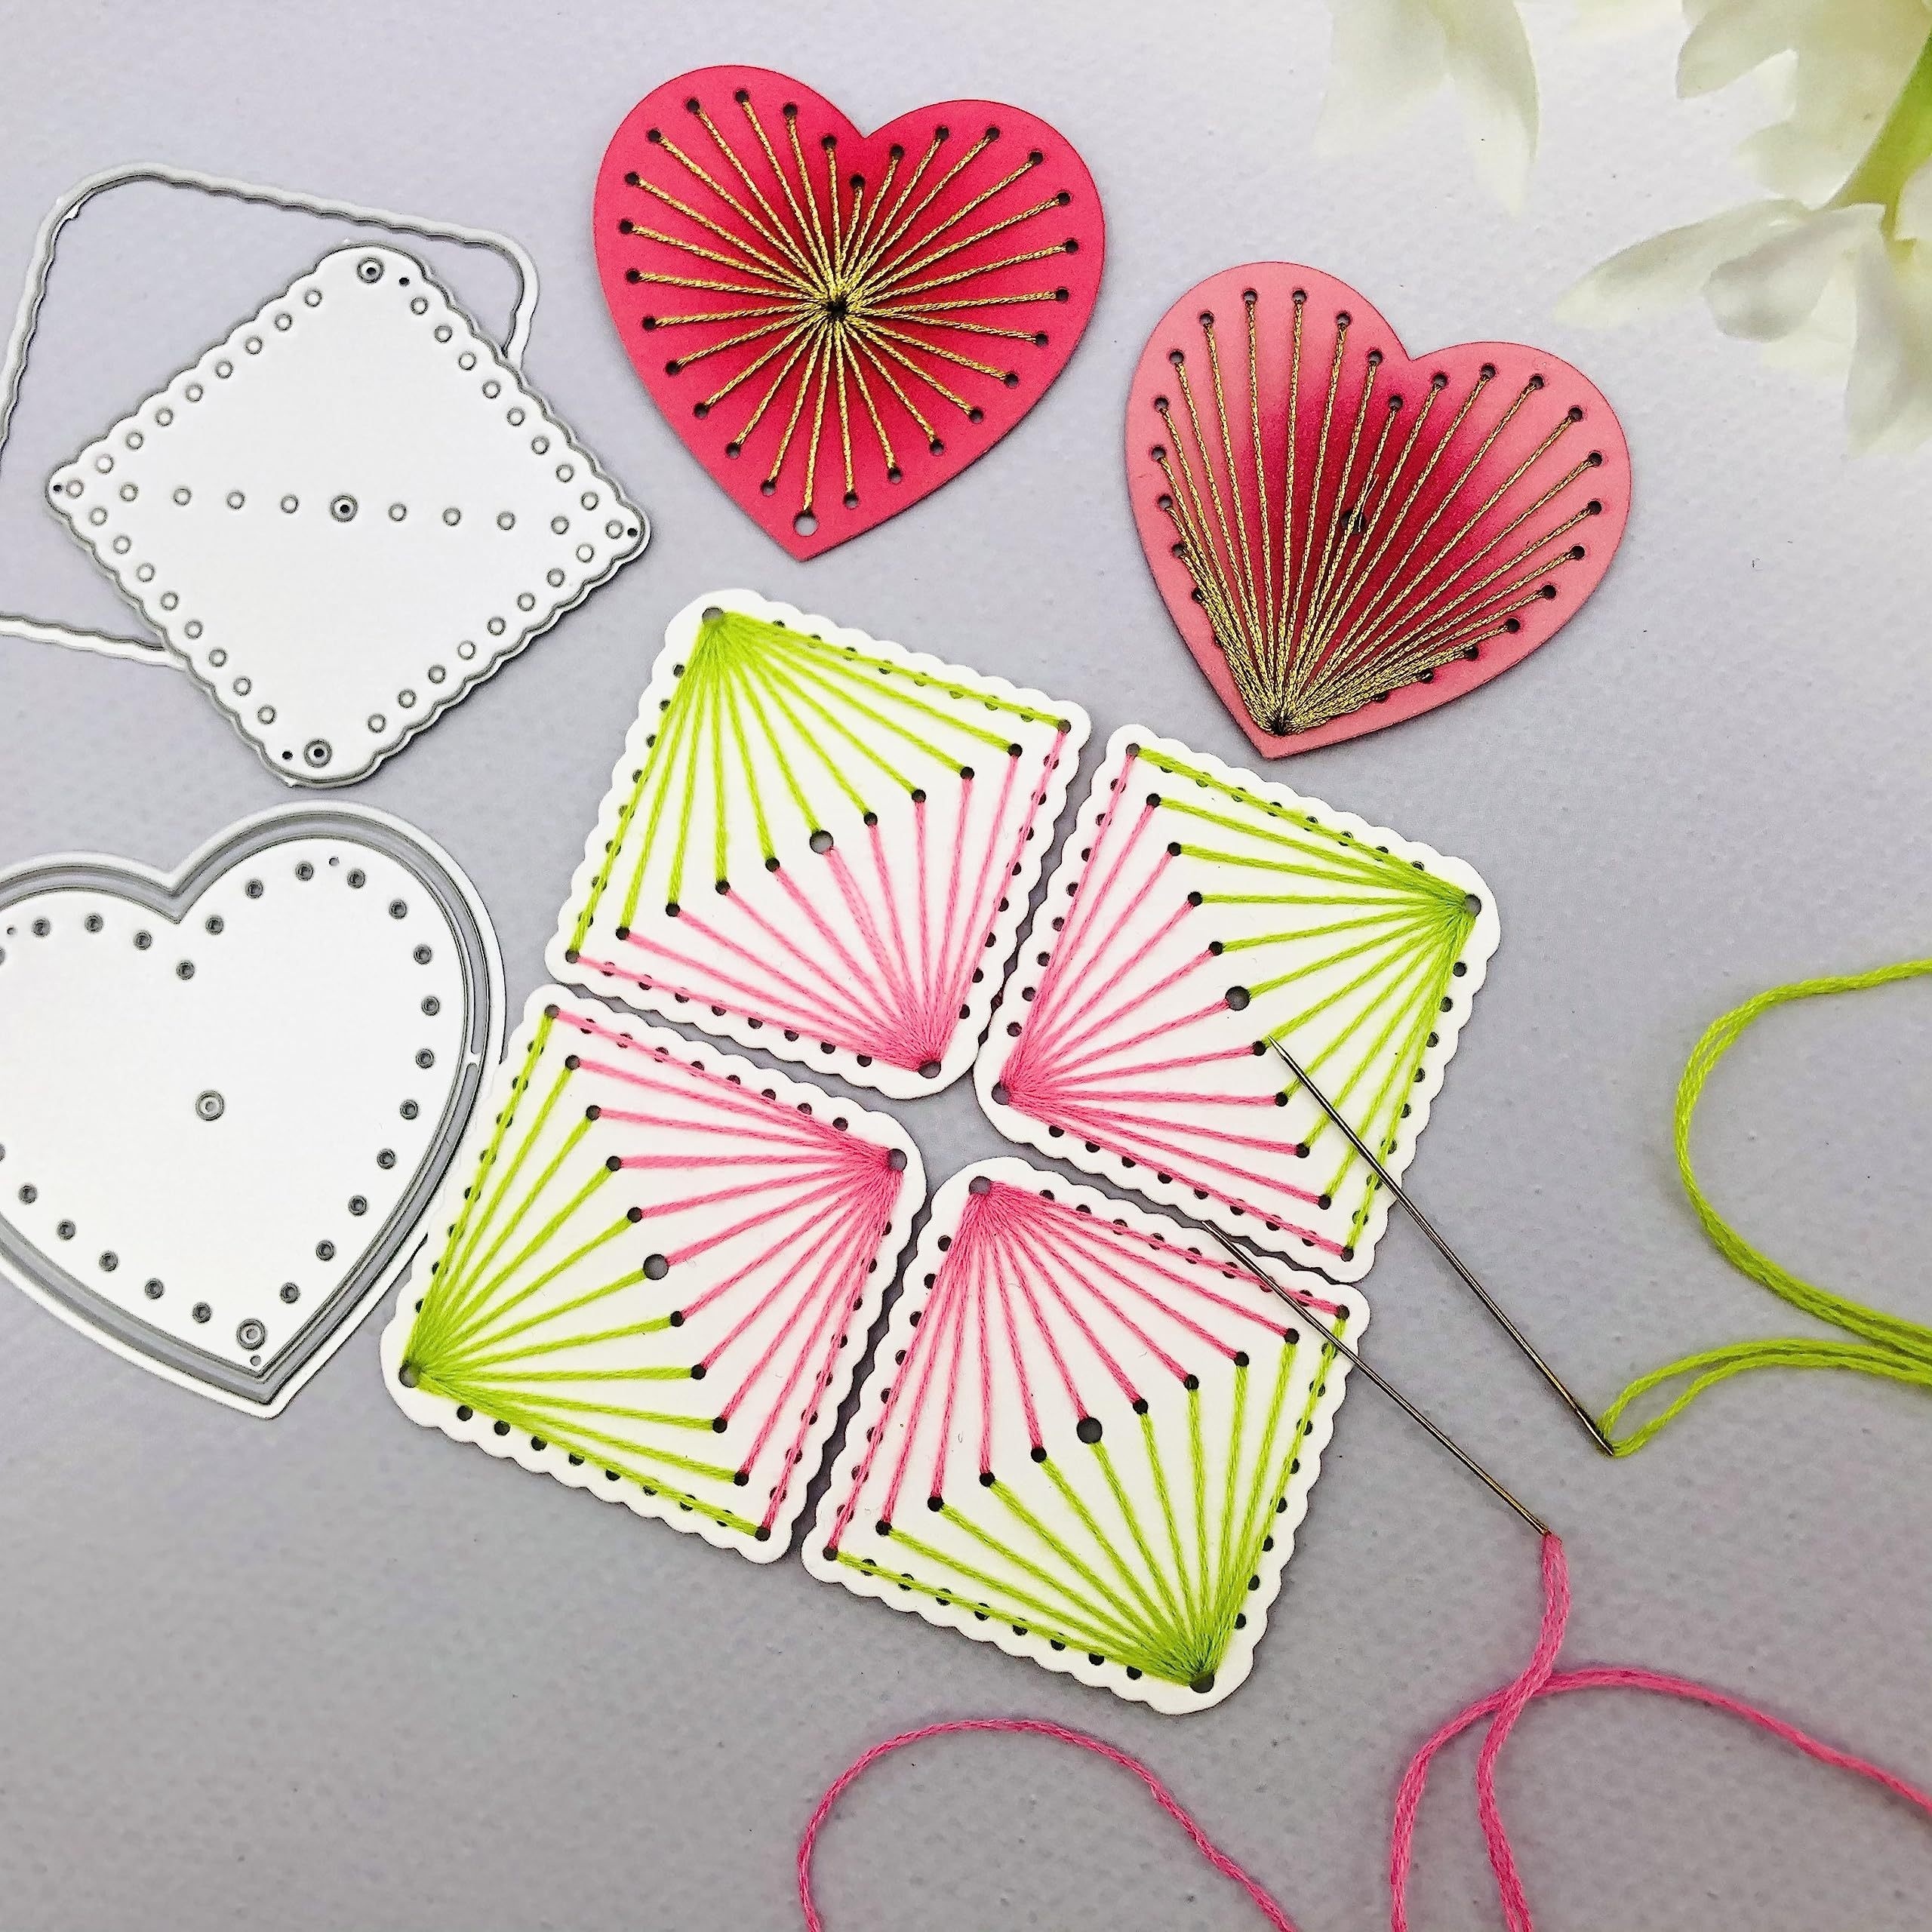 Die Cut Felt Shapes 18 Designs Card Making Crafts - Heart Flower